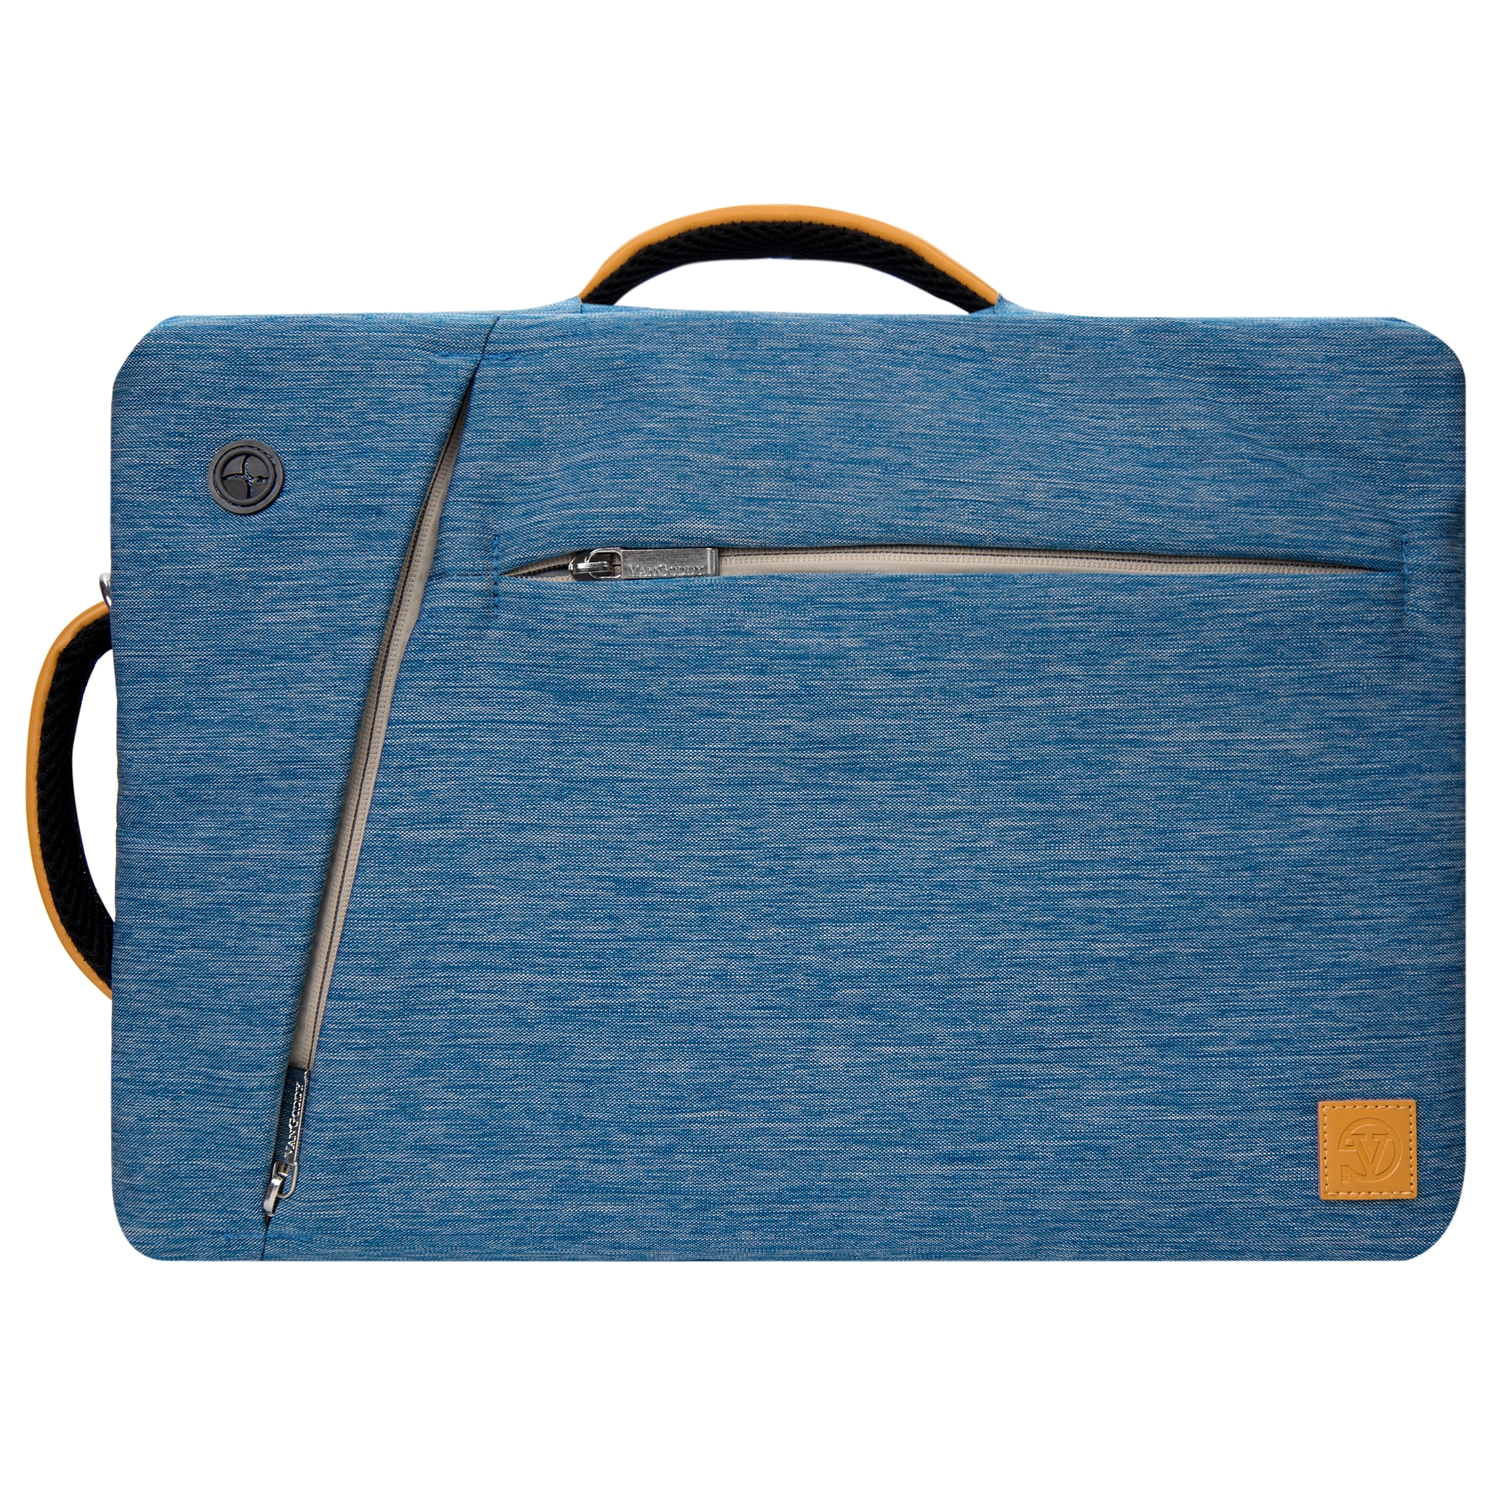 VANGODDY Slate Laptop Messenger / Carrying / Backpack Bag with Adjustable Strap fits 10, 10.1, 11, 12, 12.5 inch HP Laptops